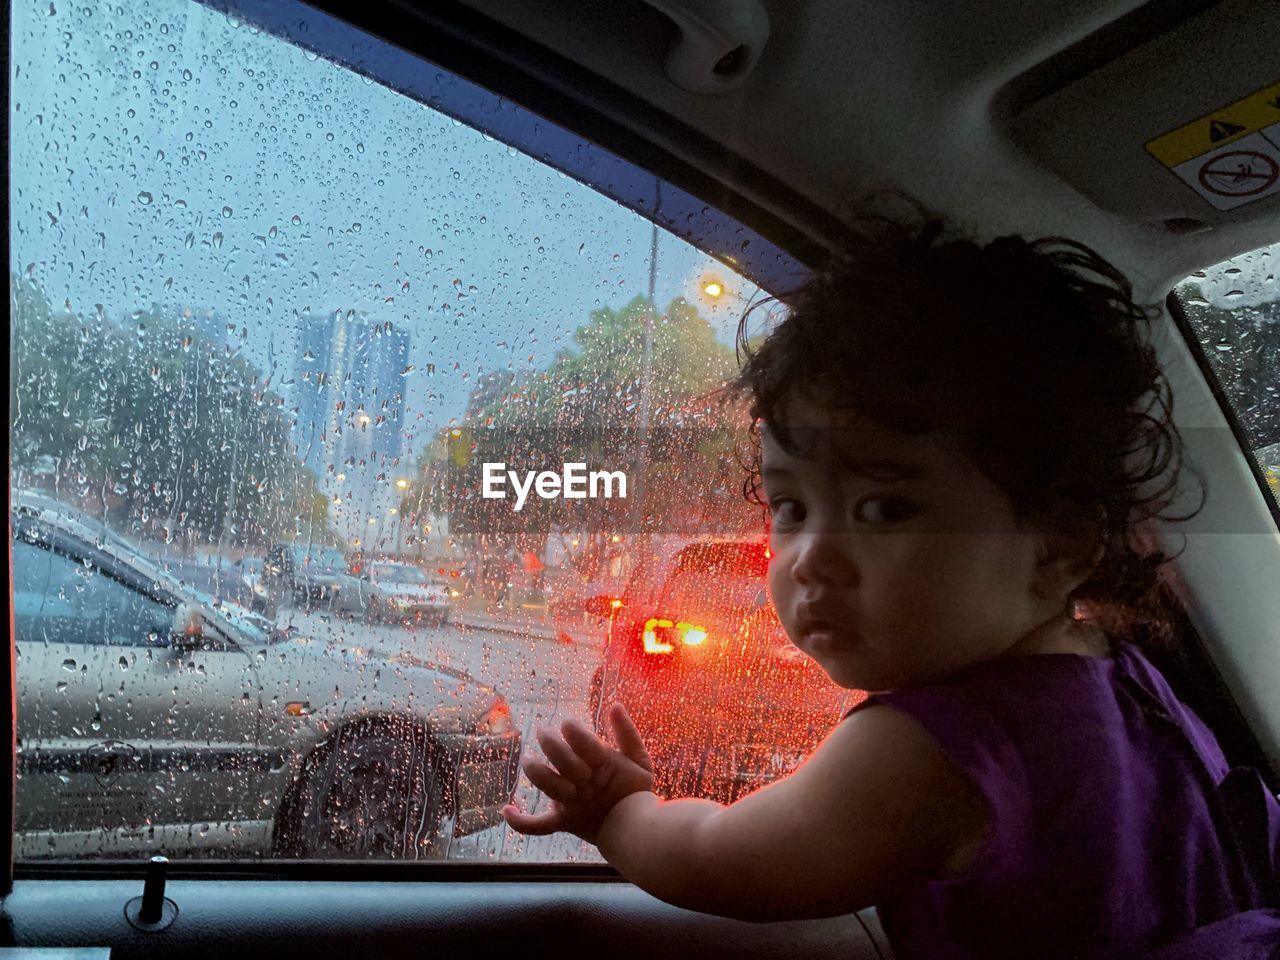 Girl looking through wet window during rainy season